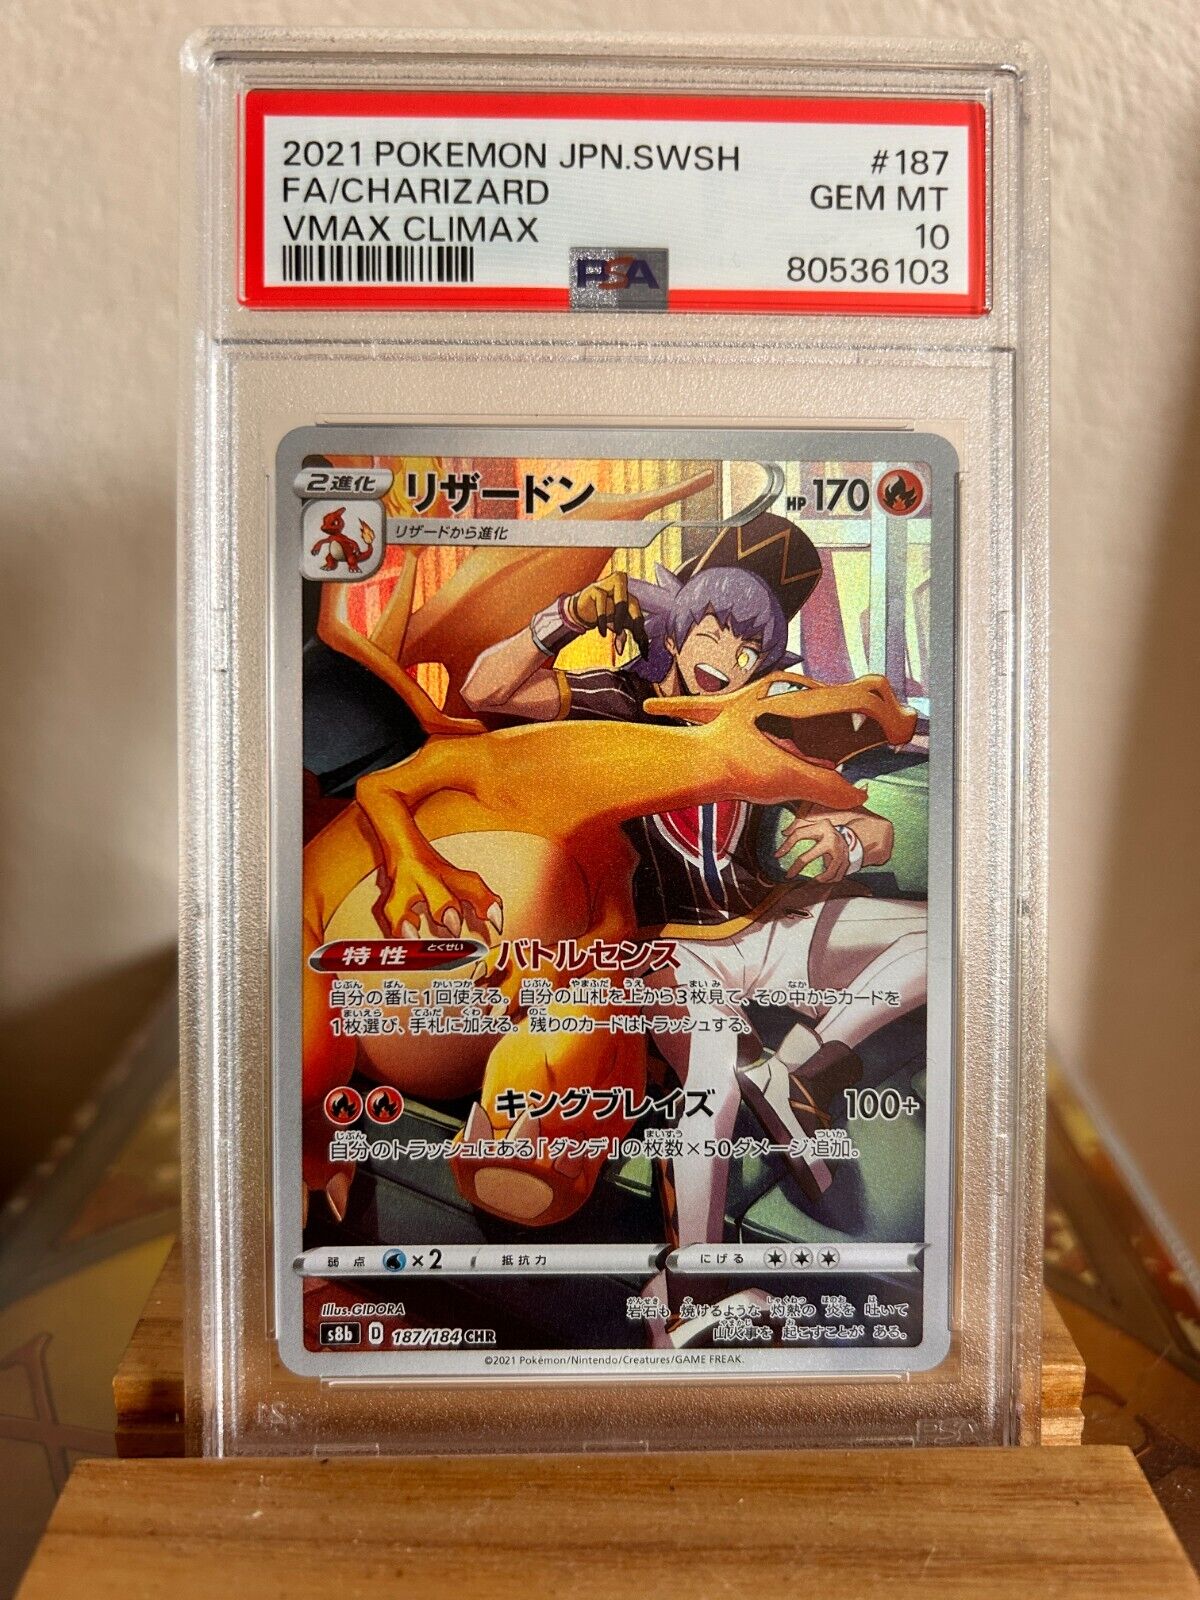 PSA 10 Charizard 187/184 CHR VMAX Climax Gem Mint Japanese Pokemon Card